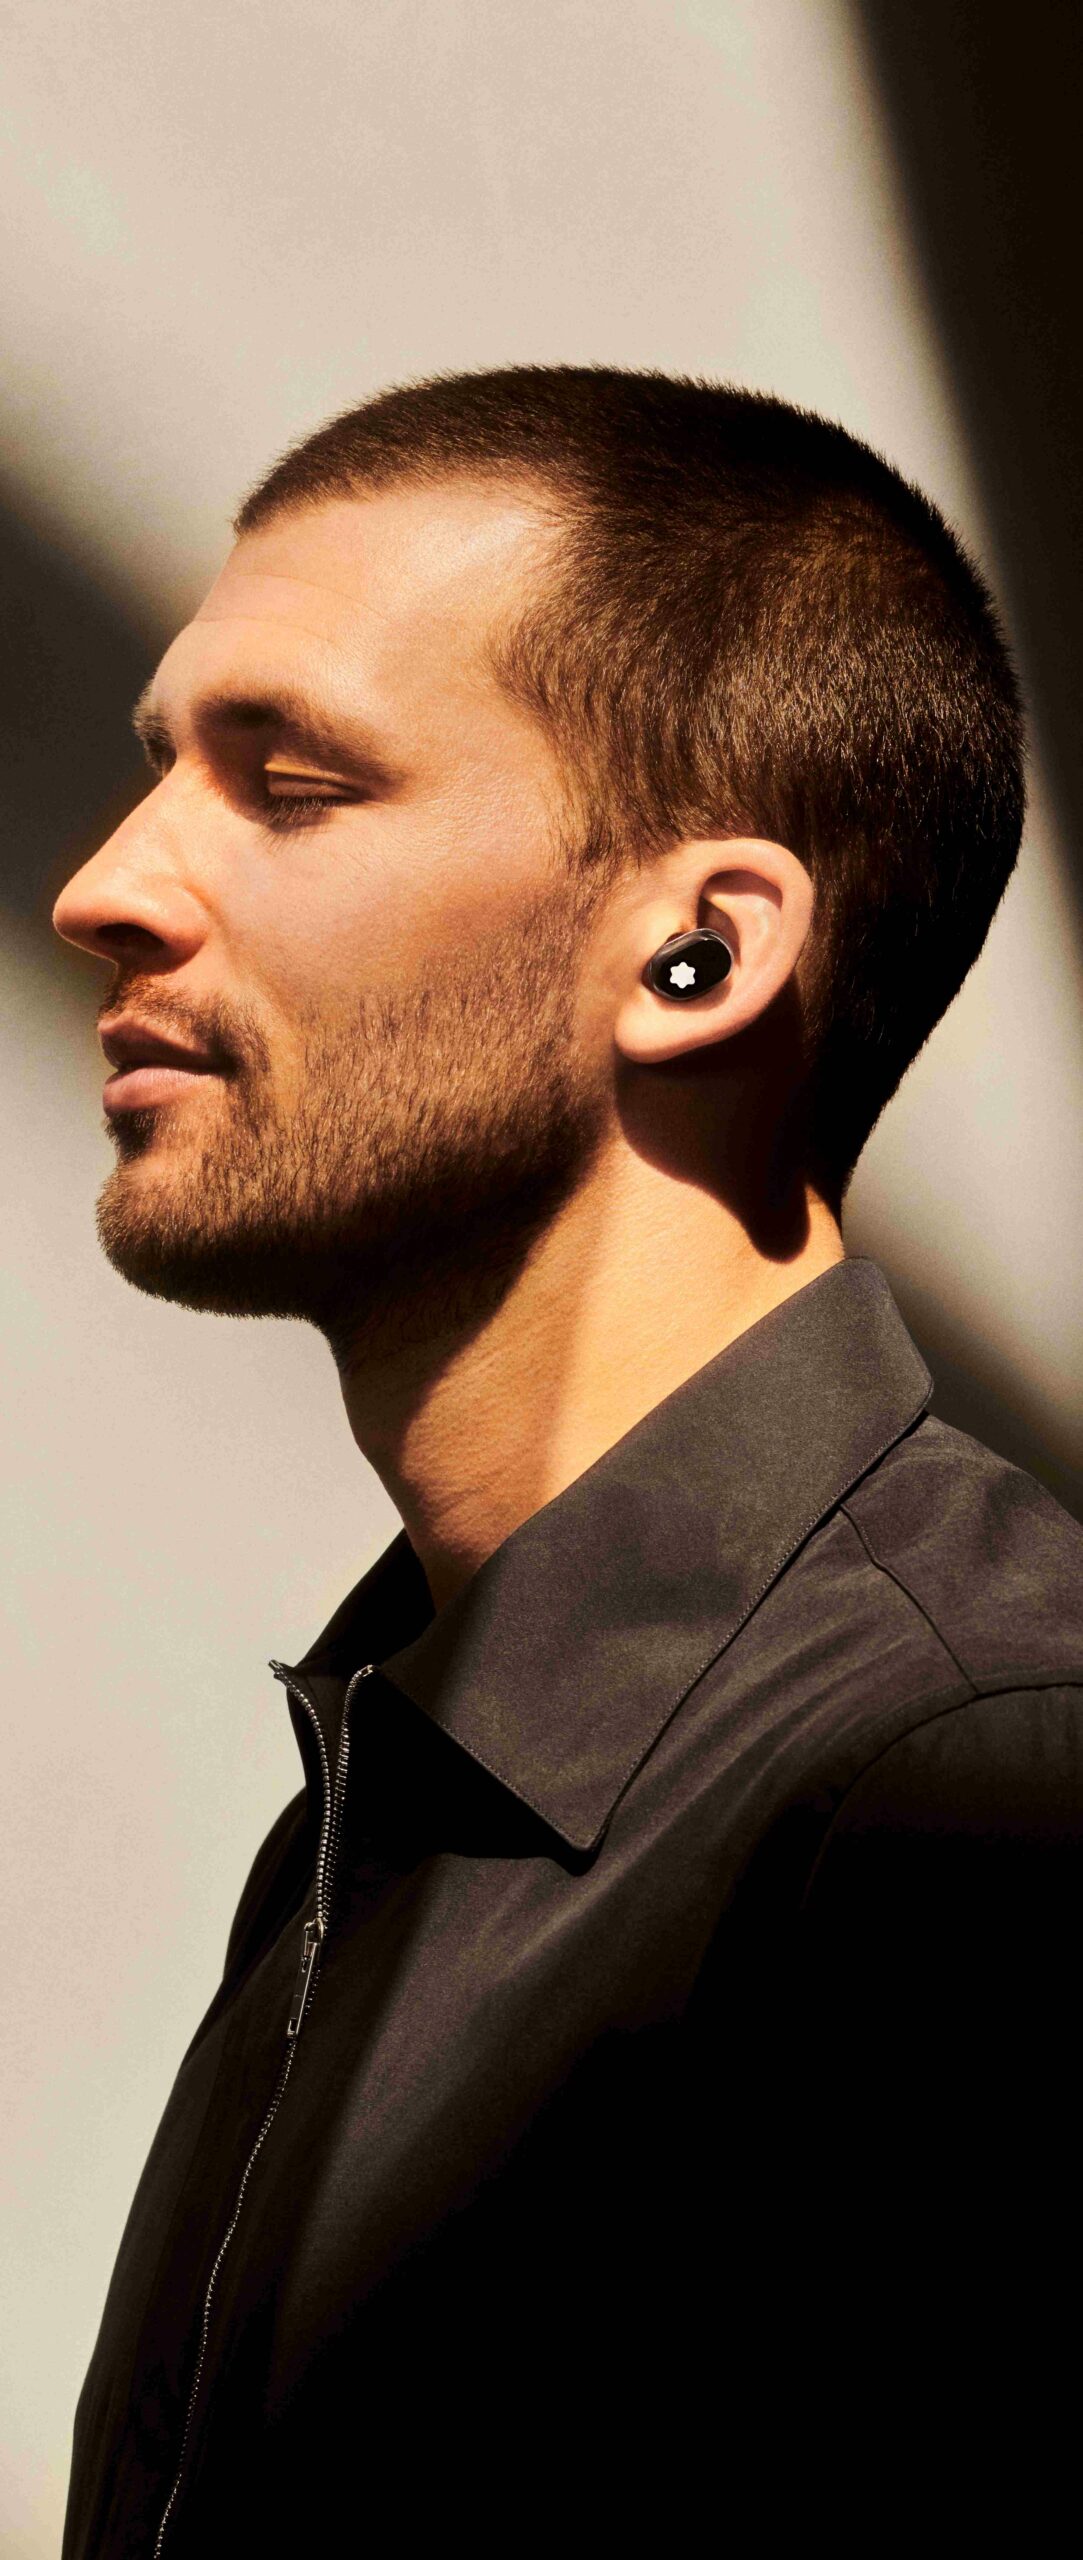 MONTBLANC 推出首款 In-Ear 無線藍芽耳機 殿堂級音學大師操刀 帶來極致奢華聽覺享受 @3C 達人廖阿輝